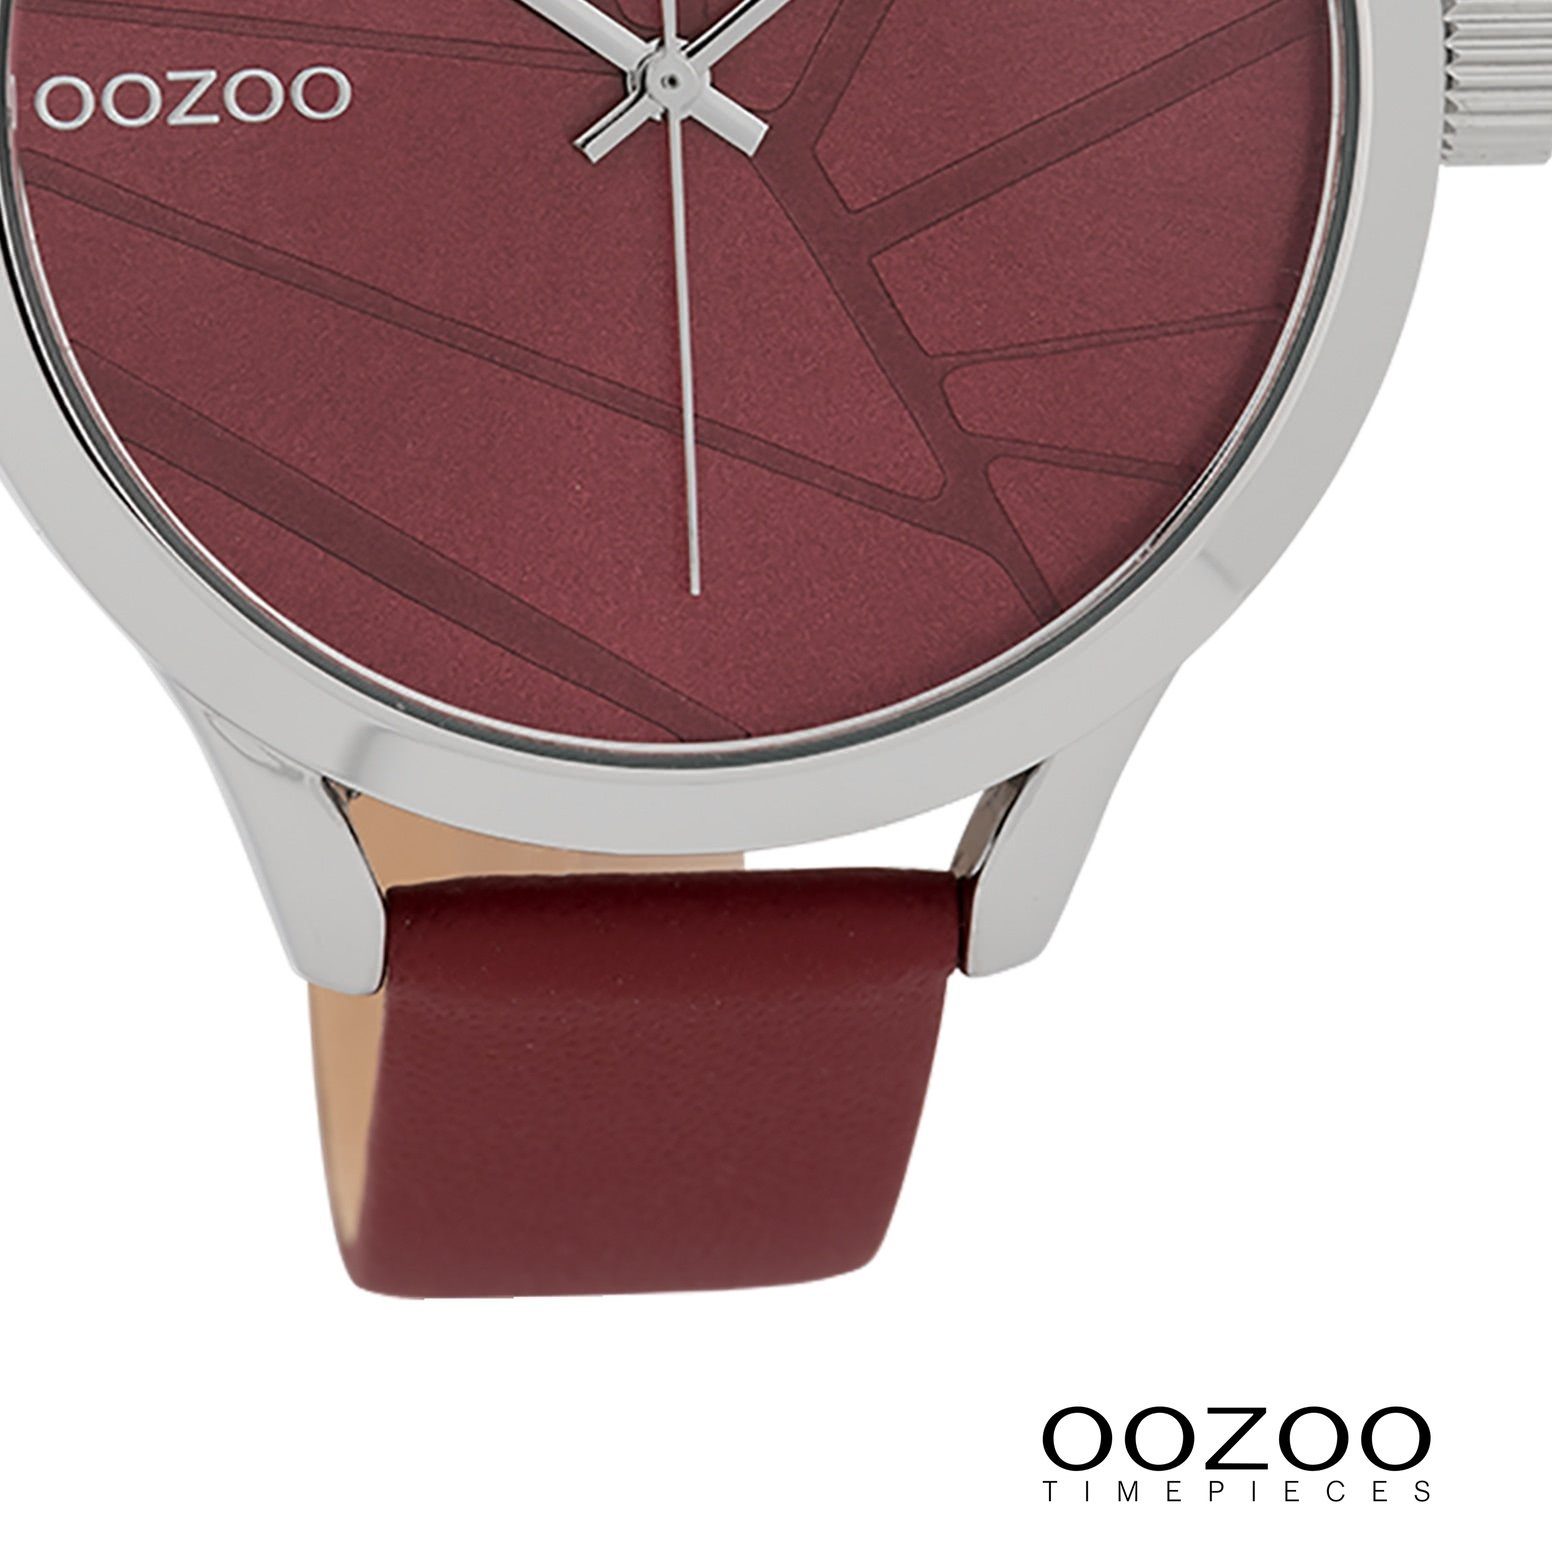 Timepieces, 43mm), Lederarmband rund, Armbanduhr groß Oozoo Quarzuhr (ca. Damen rot, Damenuhr OOZOO Fashion